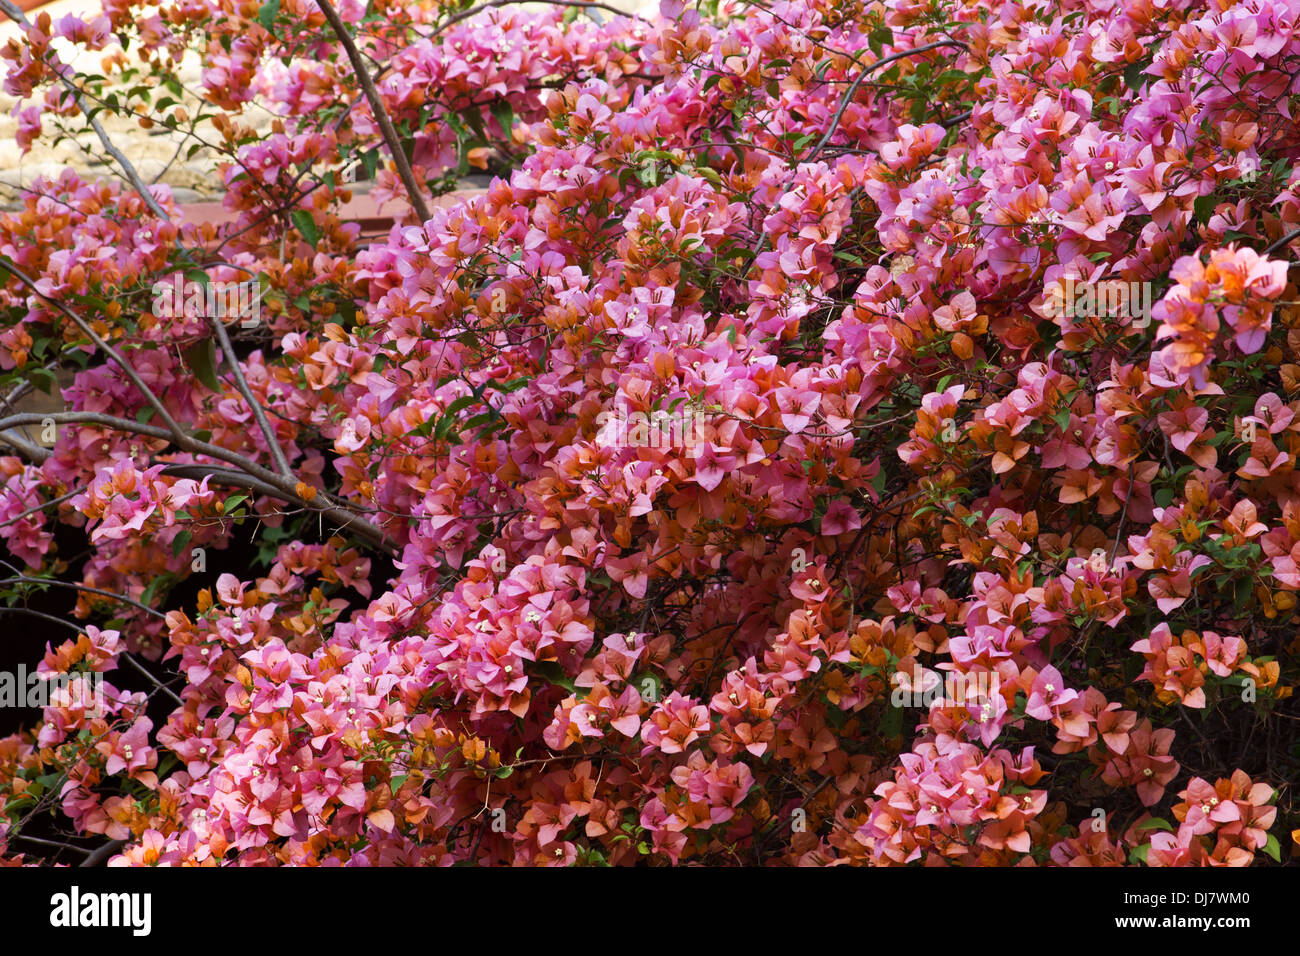 Bougainvillea plant in bloom Stock Photo